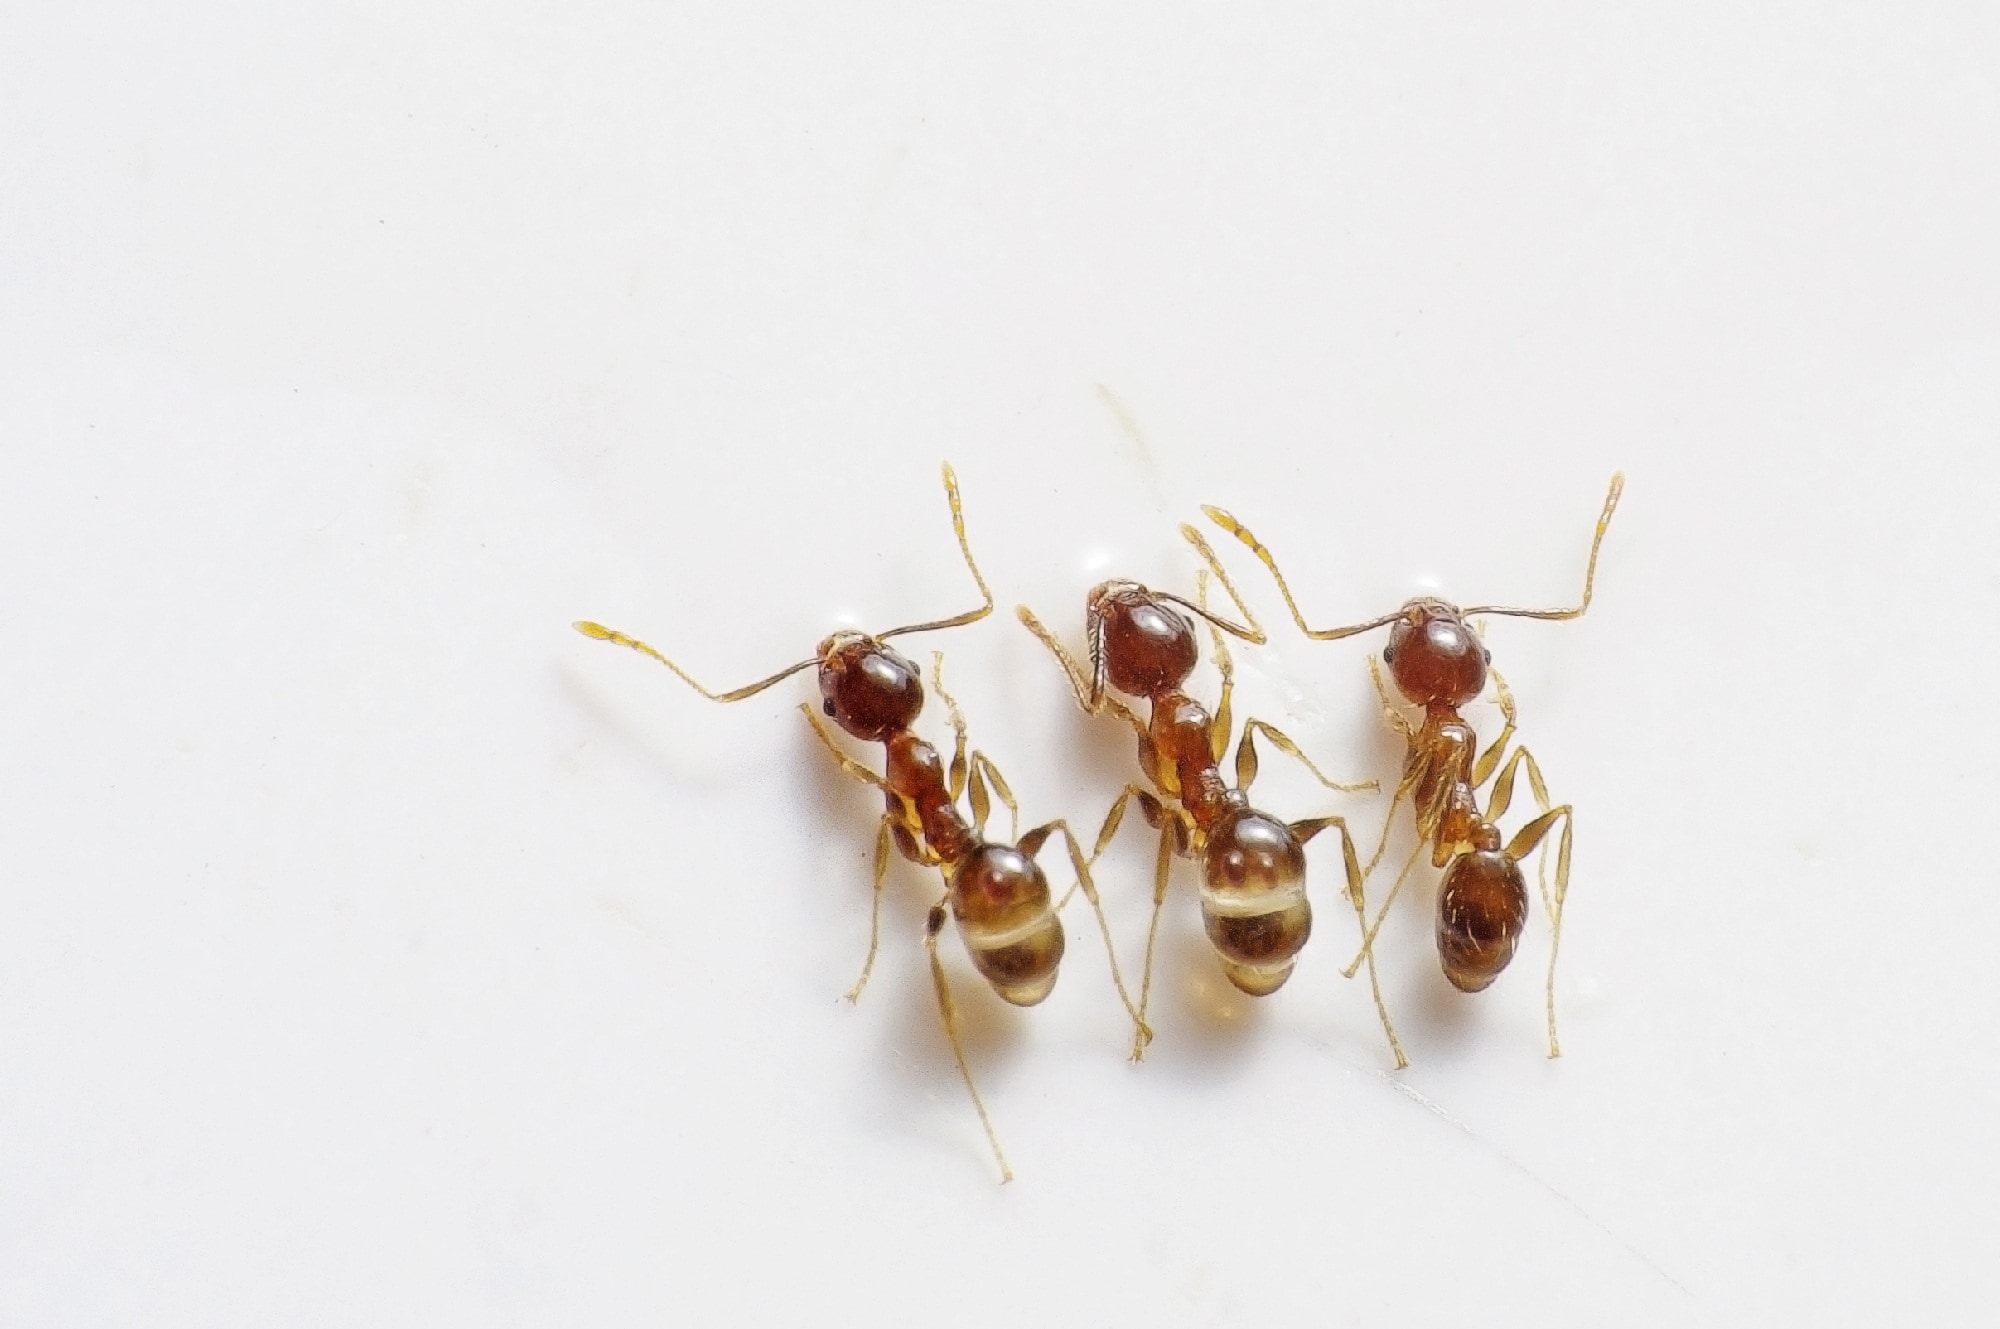 3 brown ants